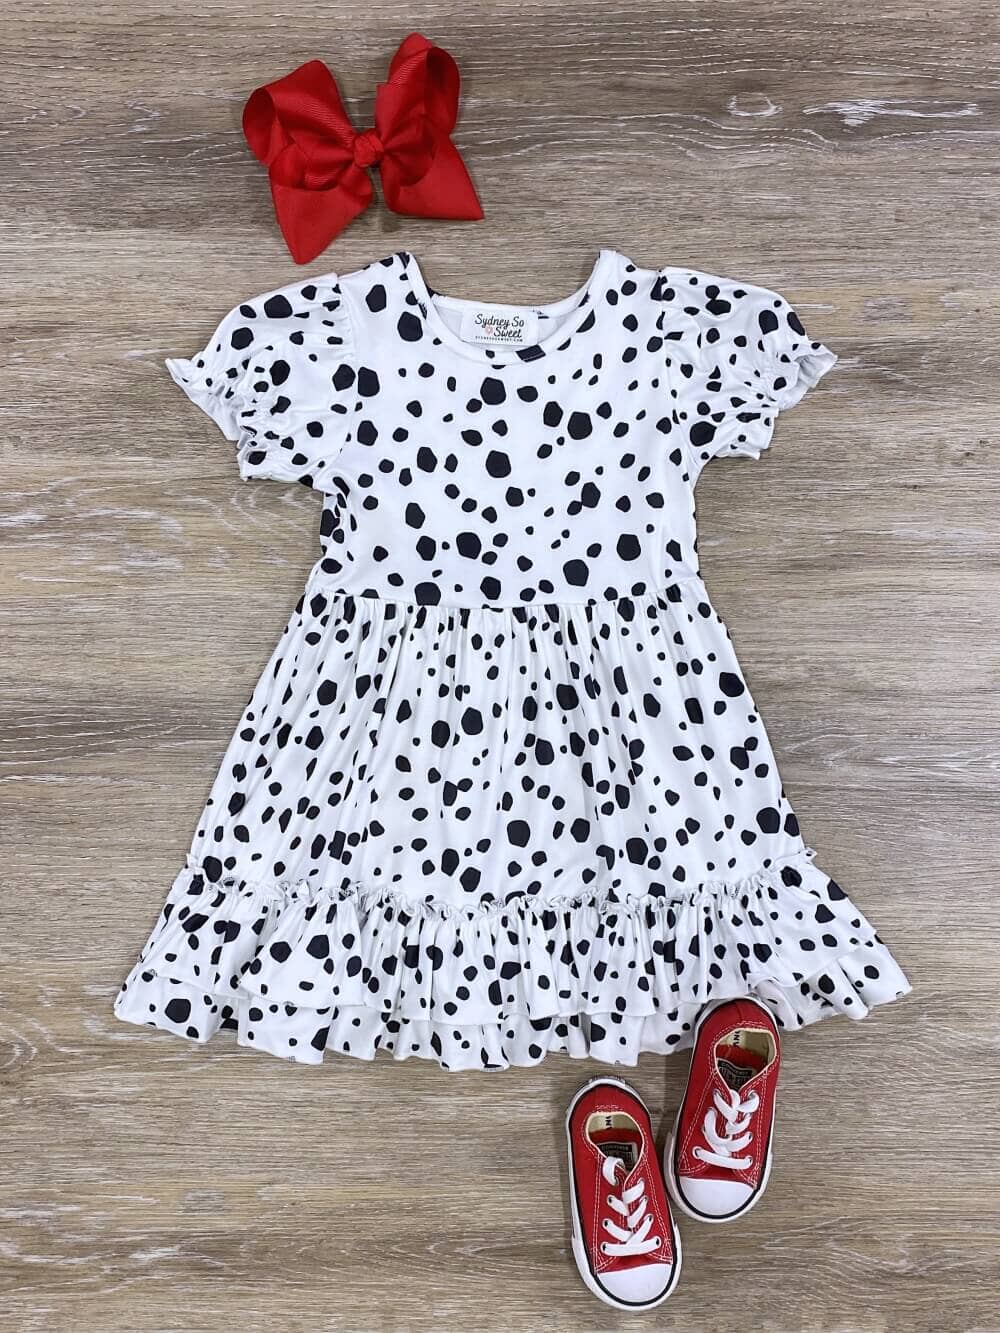 Puff Short Sleeve White & Black Girls Dalmatian Costume Dress - Sydney So Sweet